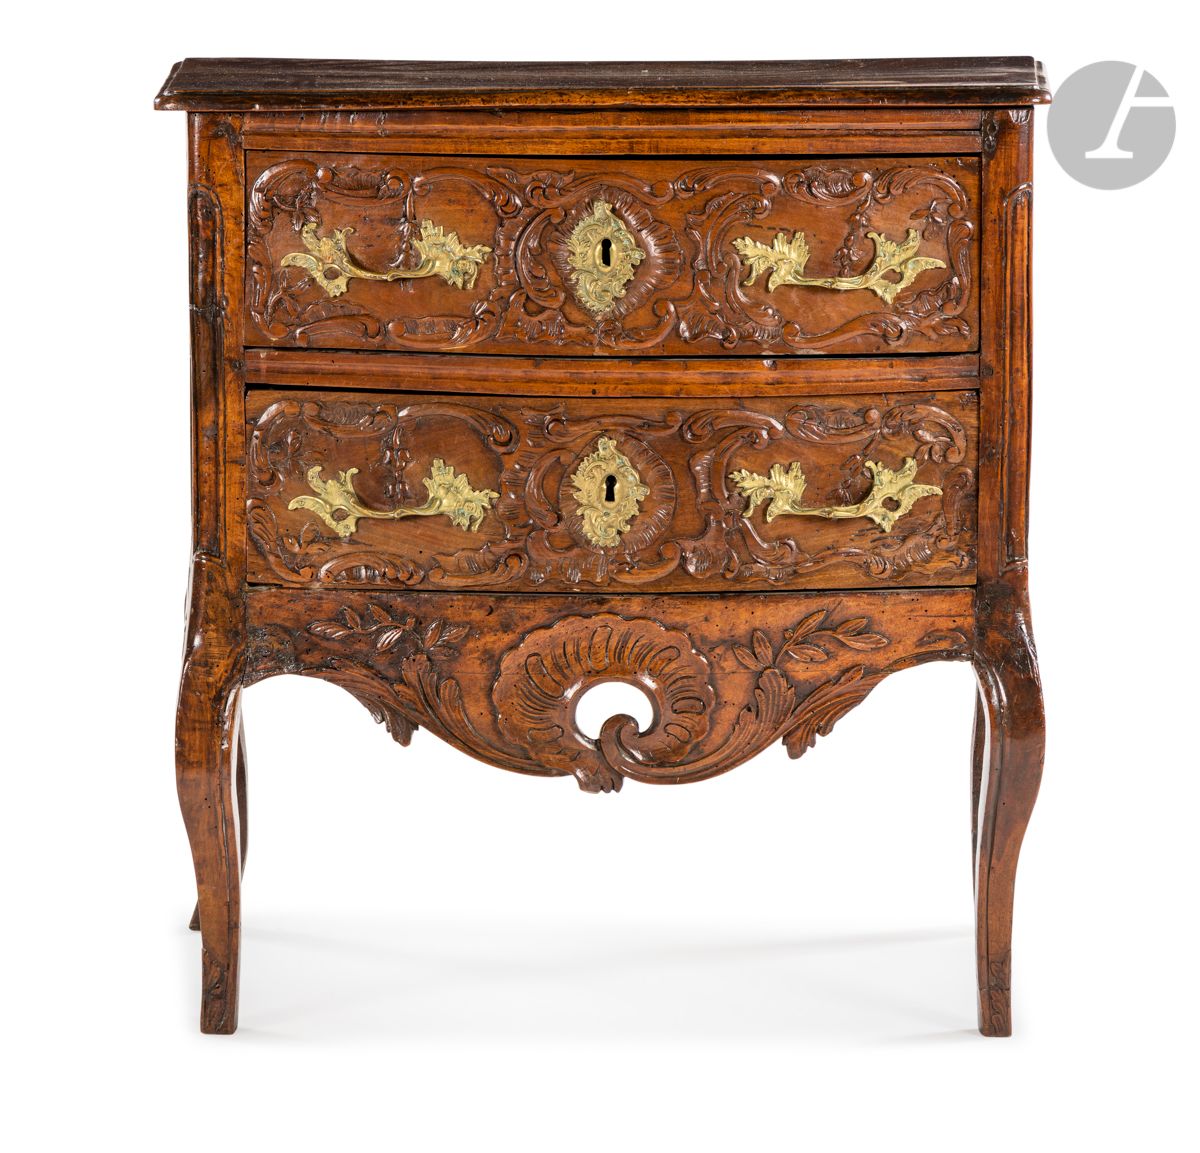 Null 一个胡桃木雕刻的抽屉柜，带有镂空装饰的叶子，罗盖尔和不对称的卡图，打开两个抽屉，靠在凸起的腿上；（事故和缺少的部分）。
普罗旺斯，18世纪中期。
高：&hellip;